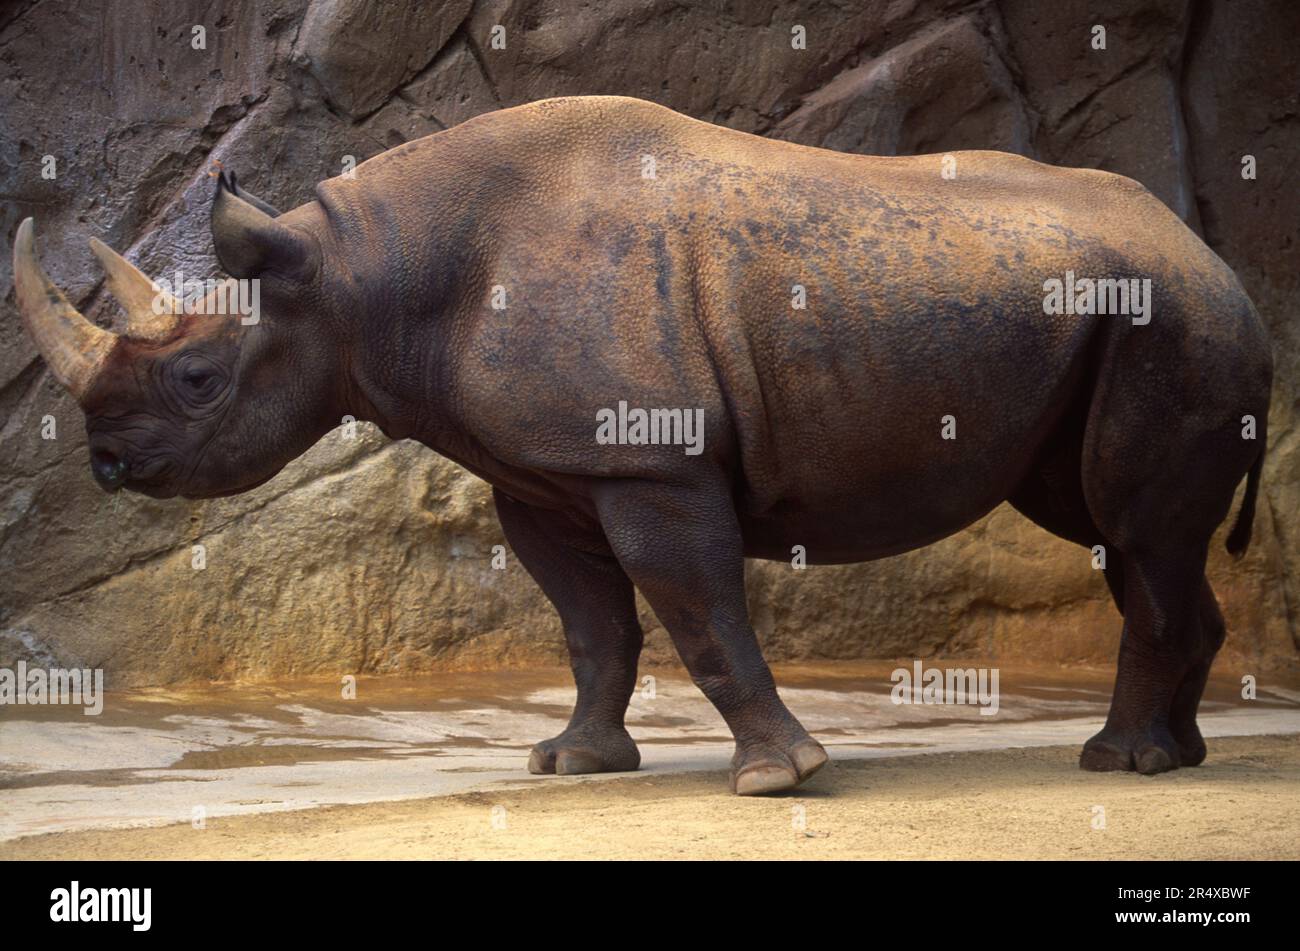 Captive rare Black rhinoceros (Diceros bicornis) in a zoo enclosure; San Diego, California, United States of America Stock Photo